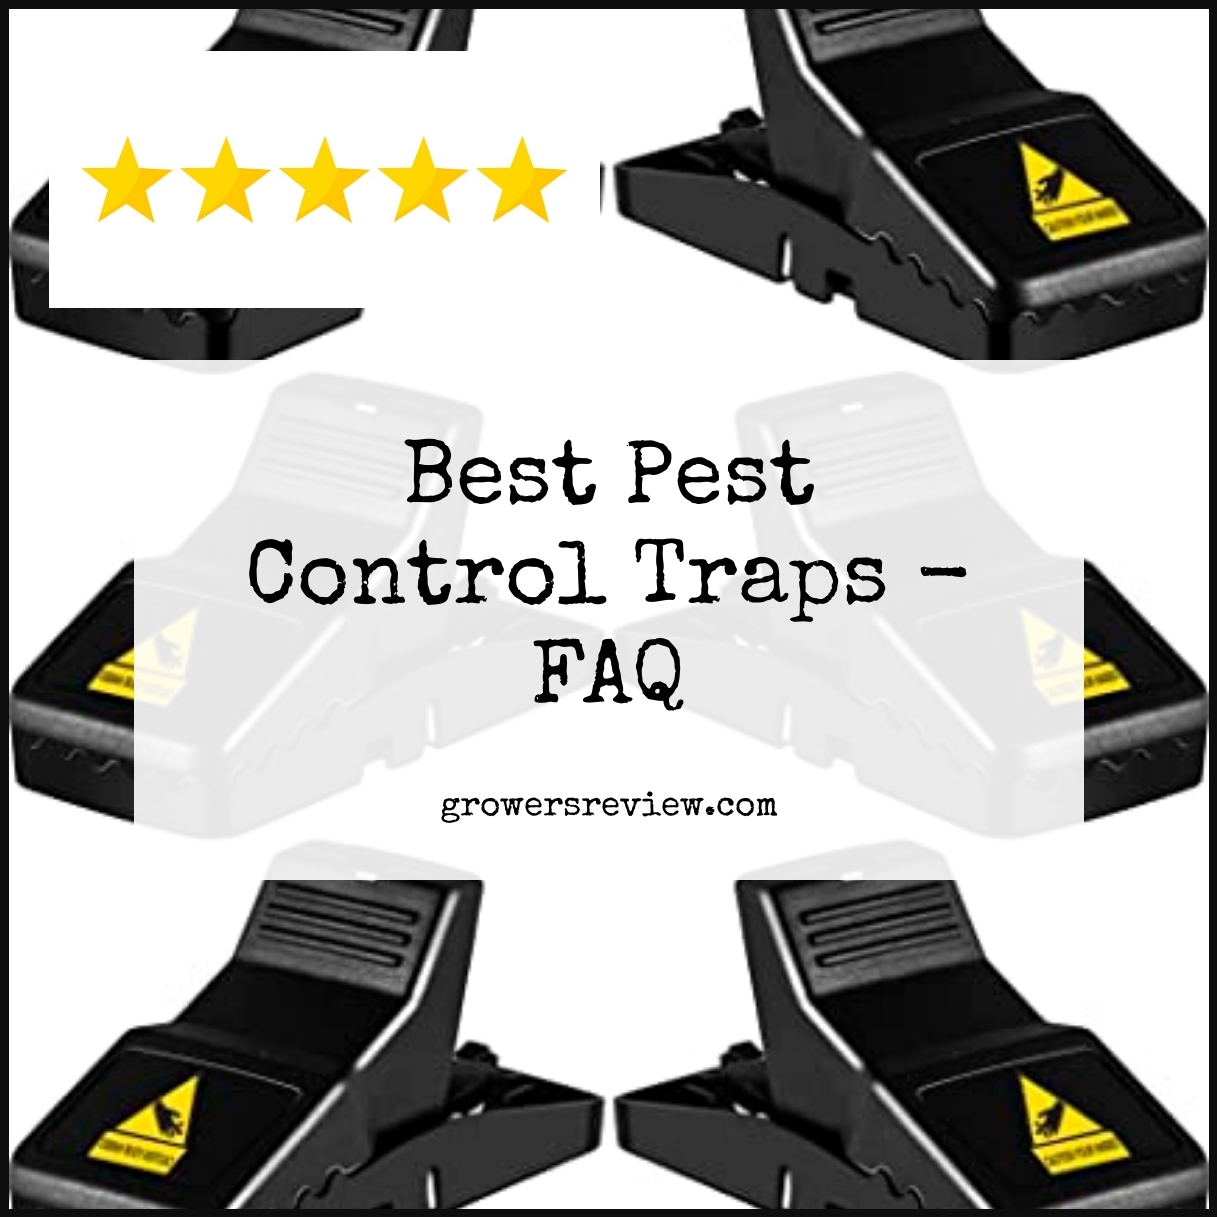 Best Pest Control Traps - FAQ